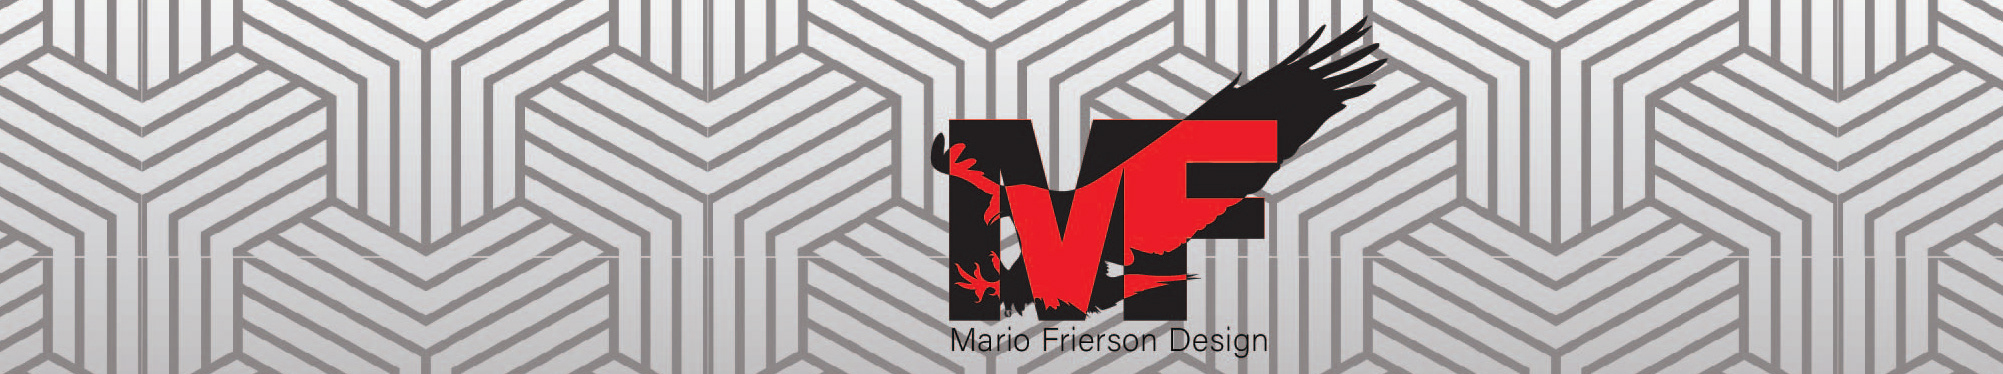 Banner de perfil de Mario Frierson